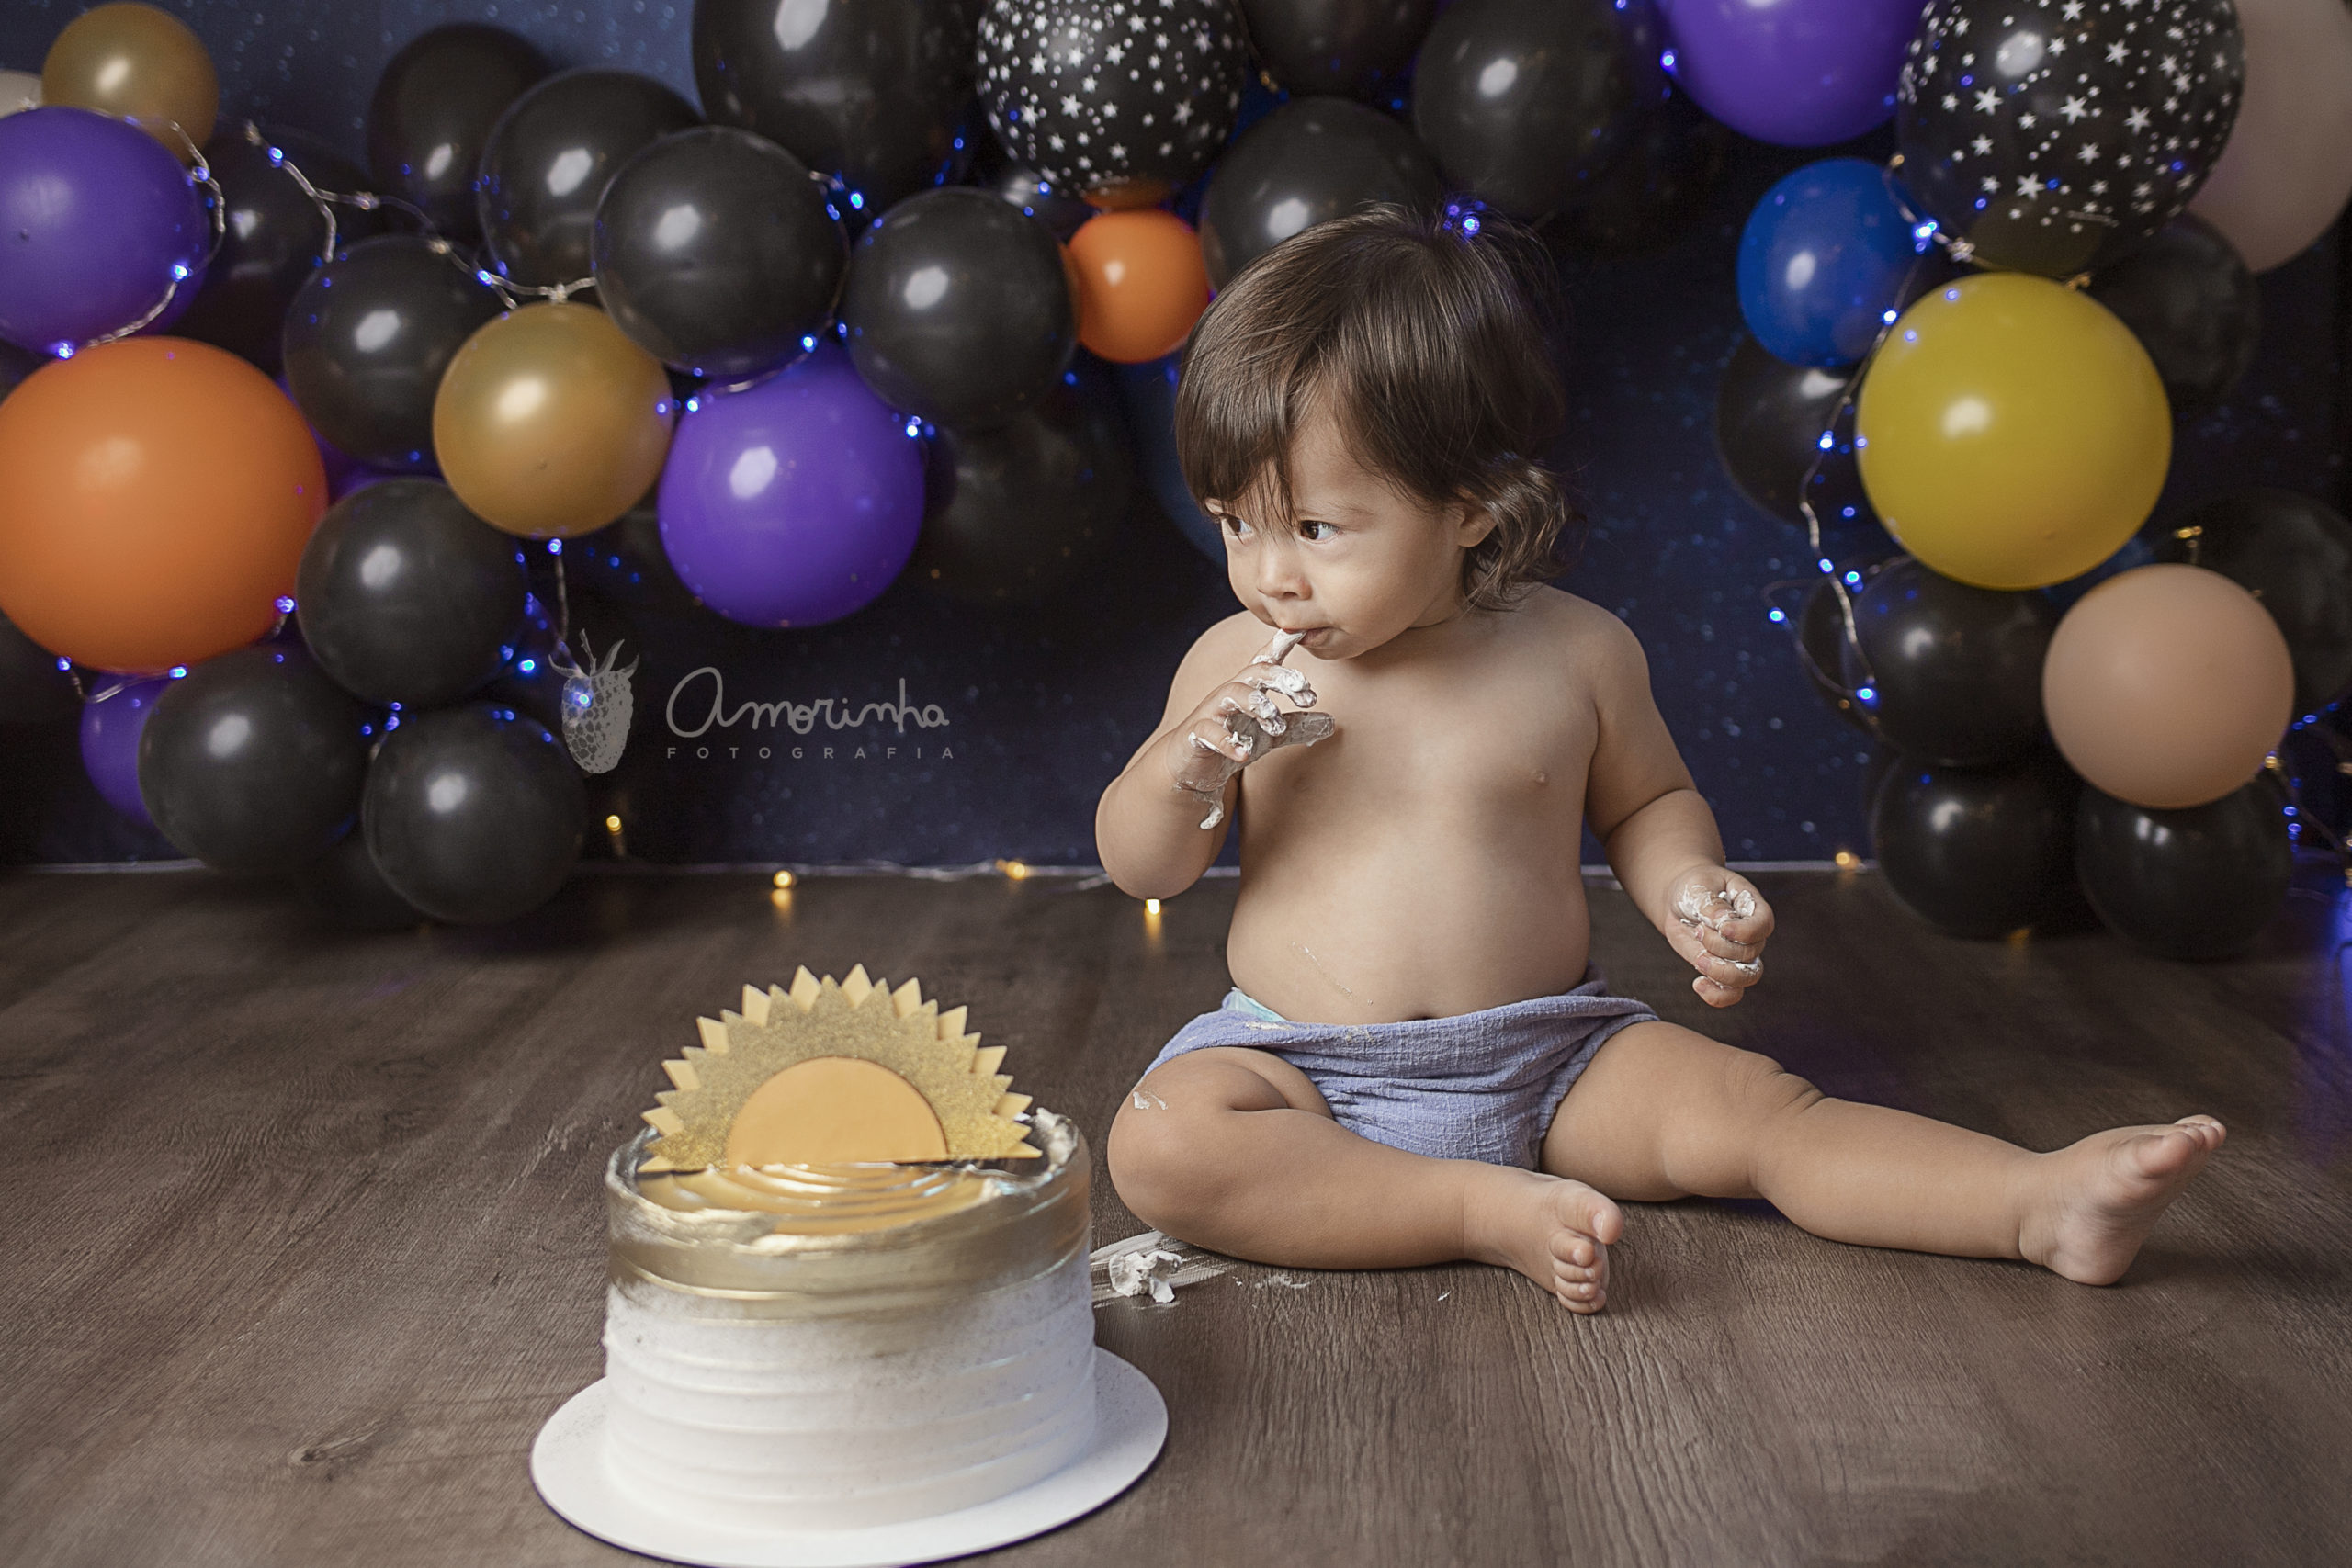 Smash-the-cake-Amorinha-Fotografia-tijuca-RJ (2)